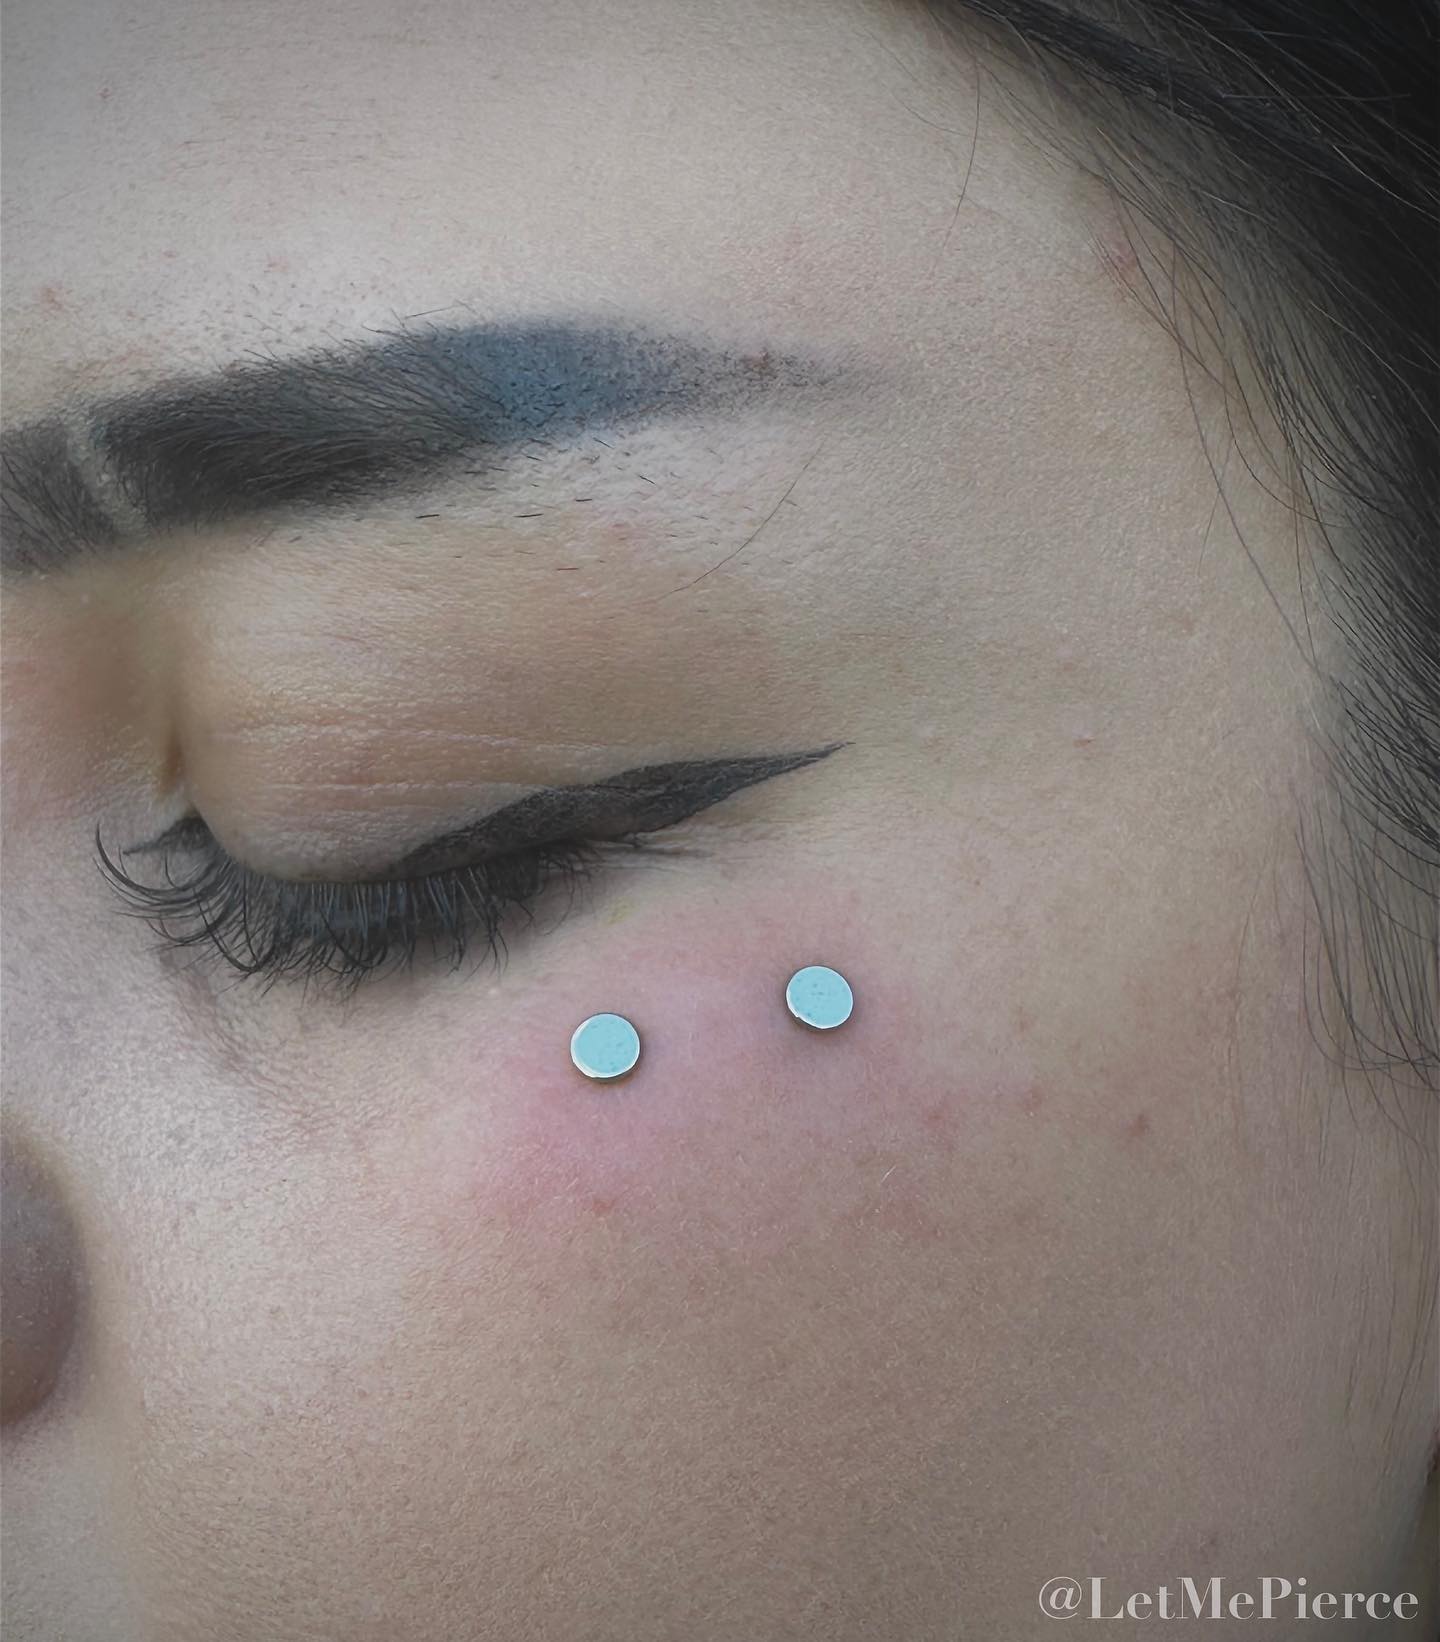 Anti Eyebrow Piercing: Placement, Price, Pain, Healing, Jewelry